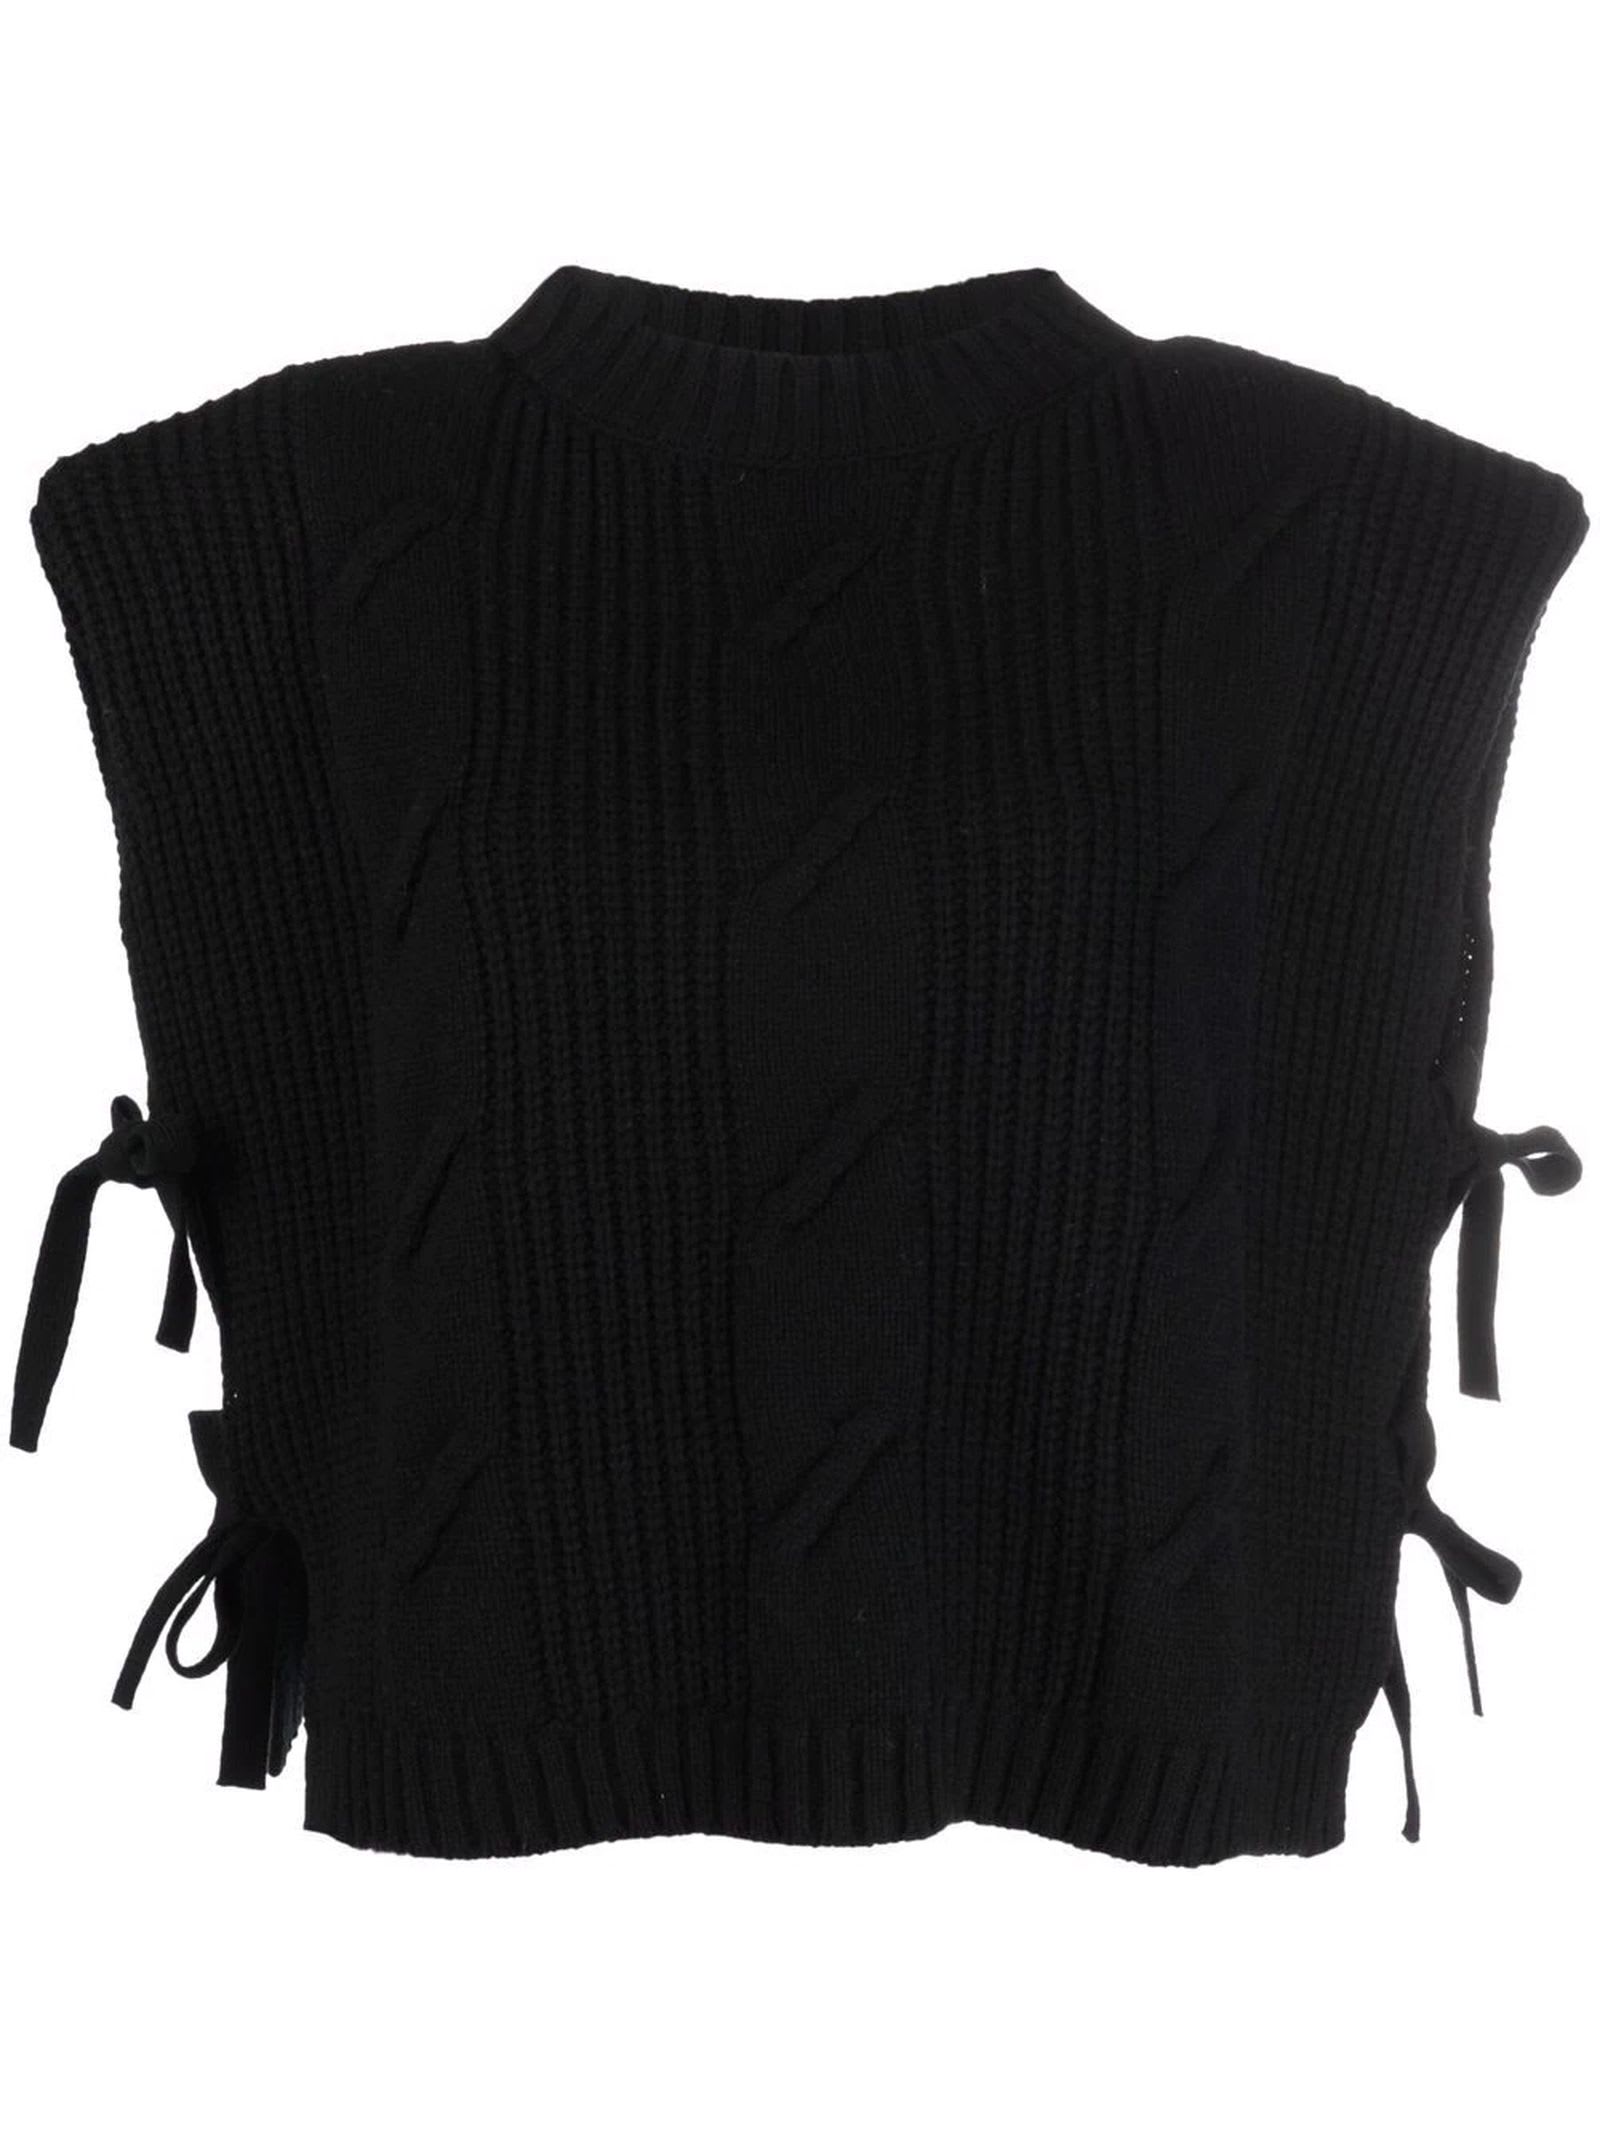 Federica Tosi Black Wool-blend Cropped Top